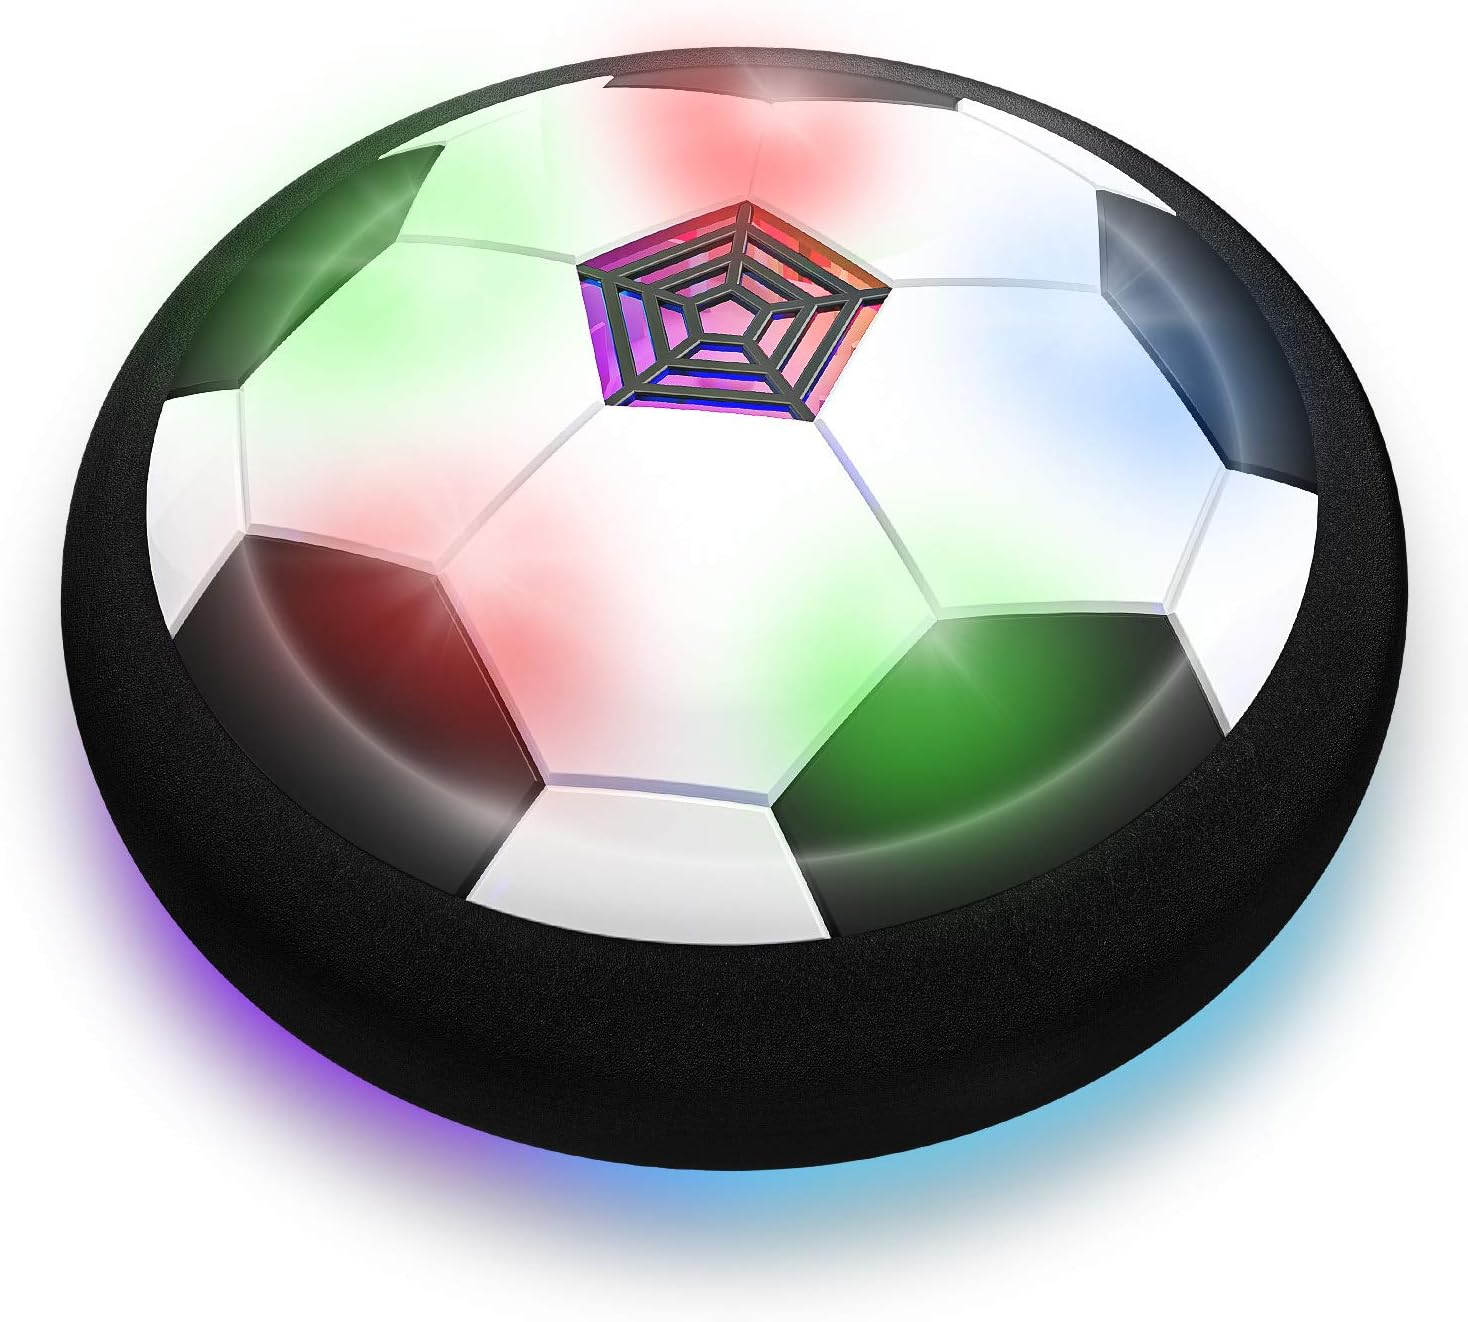 LED hover soccer ball toy